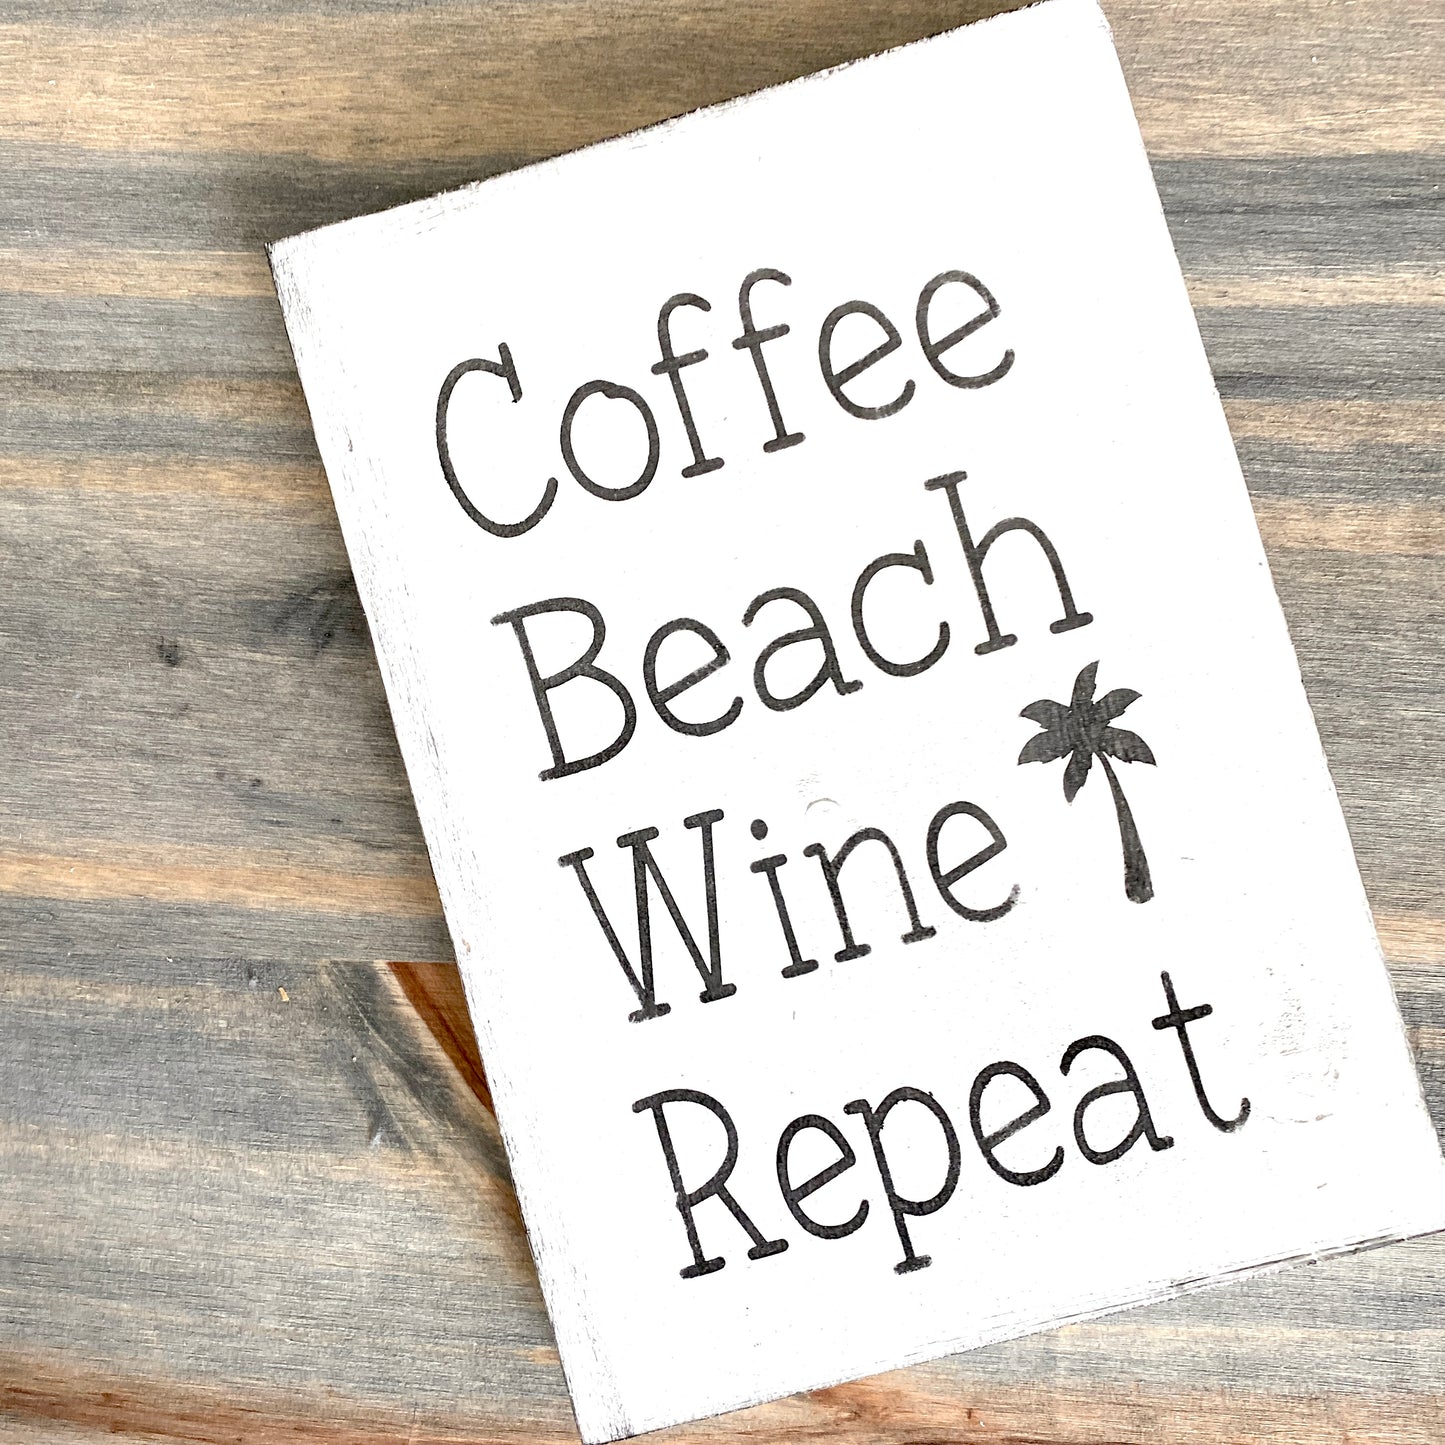 Coffee Beach Wine Repeat Sign